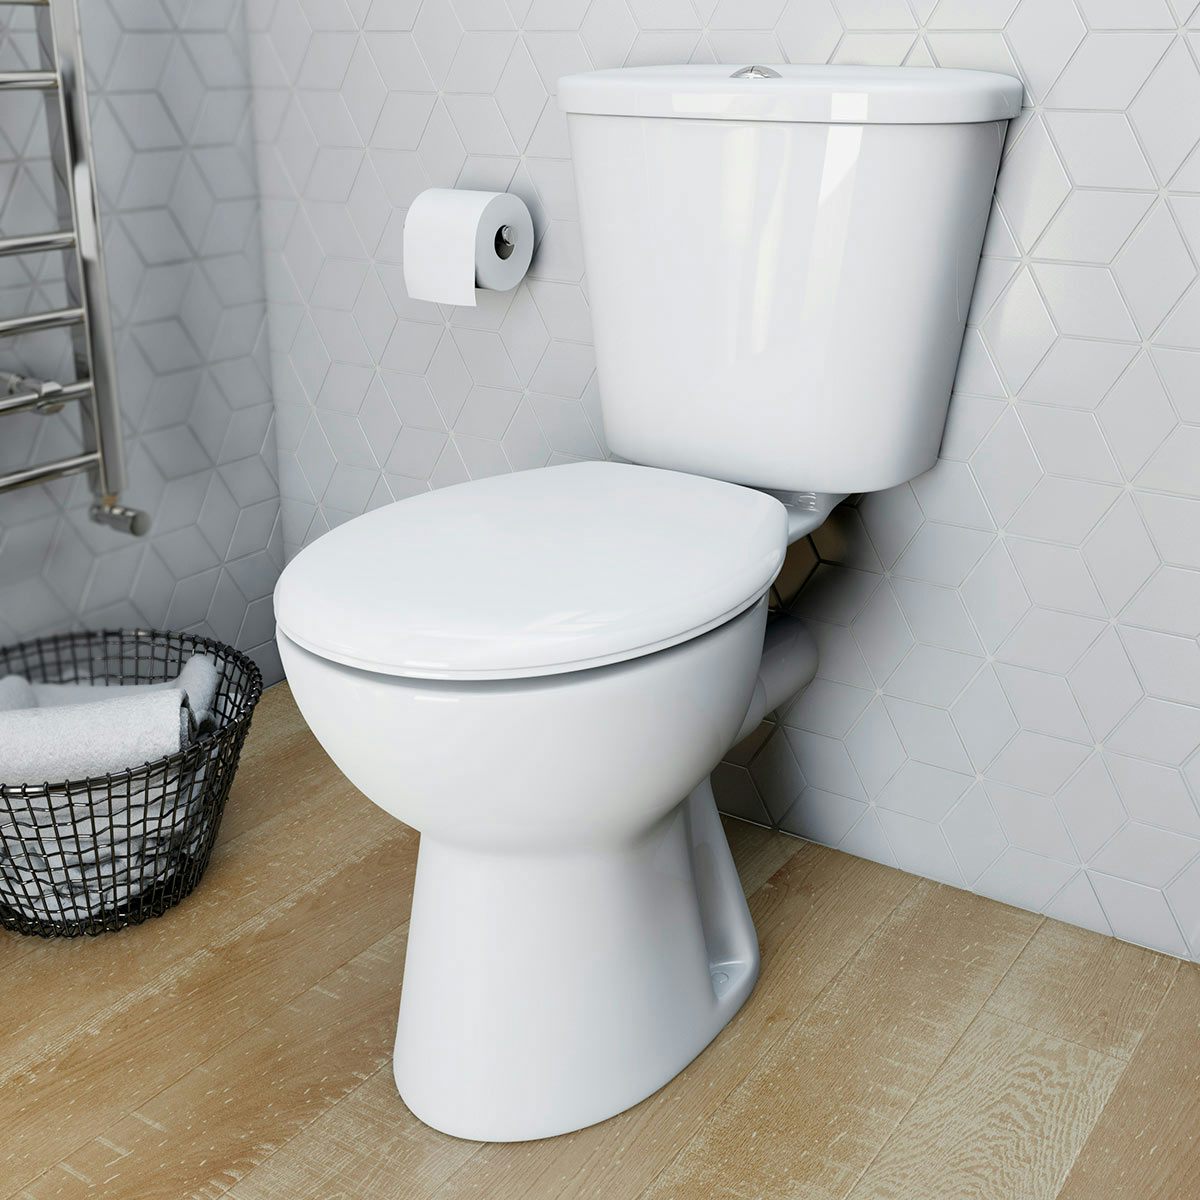 Simple universal thermoplast toilet seat